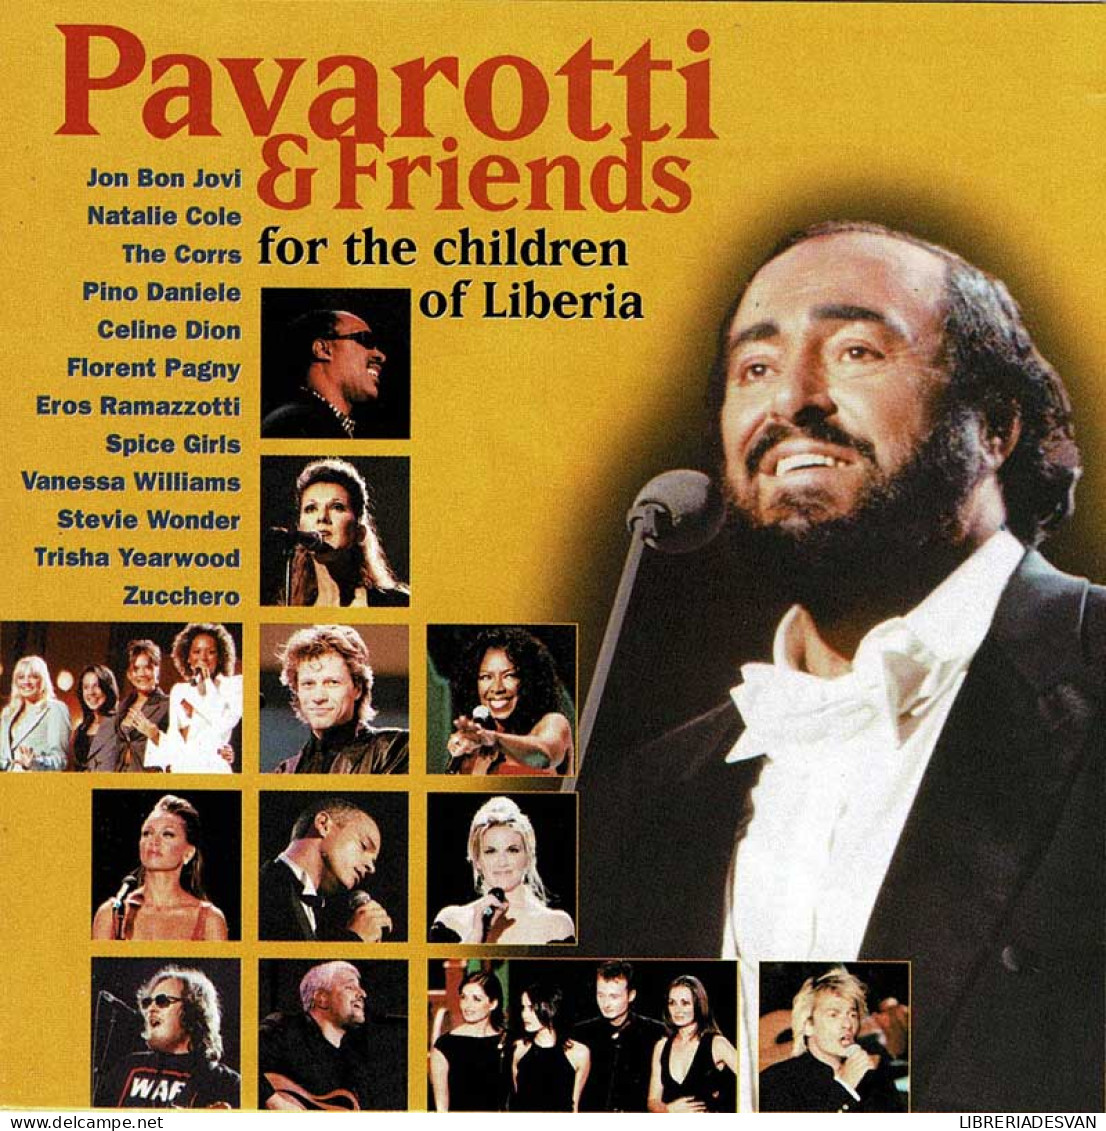 Pavarotti & Friends - Pavarotti & Friends For The Children Of Liberia. CD - Classical